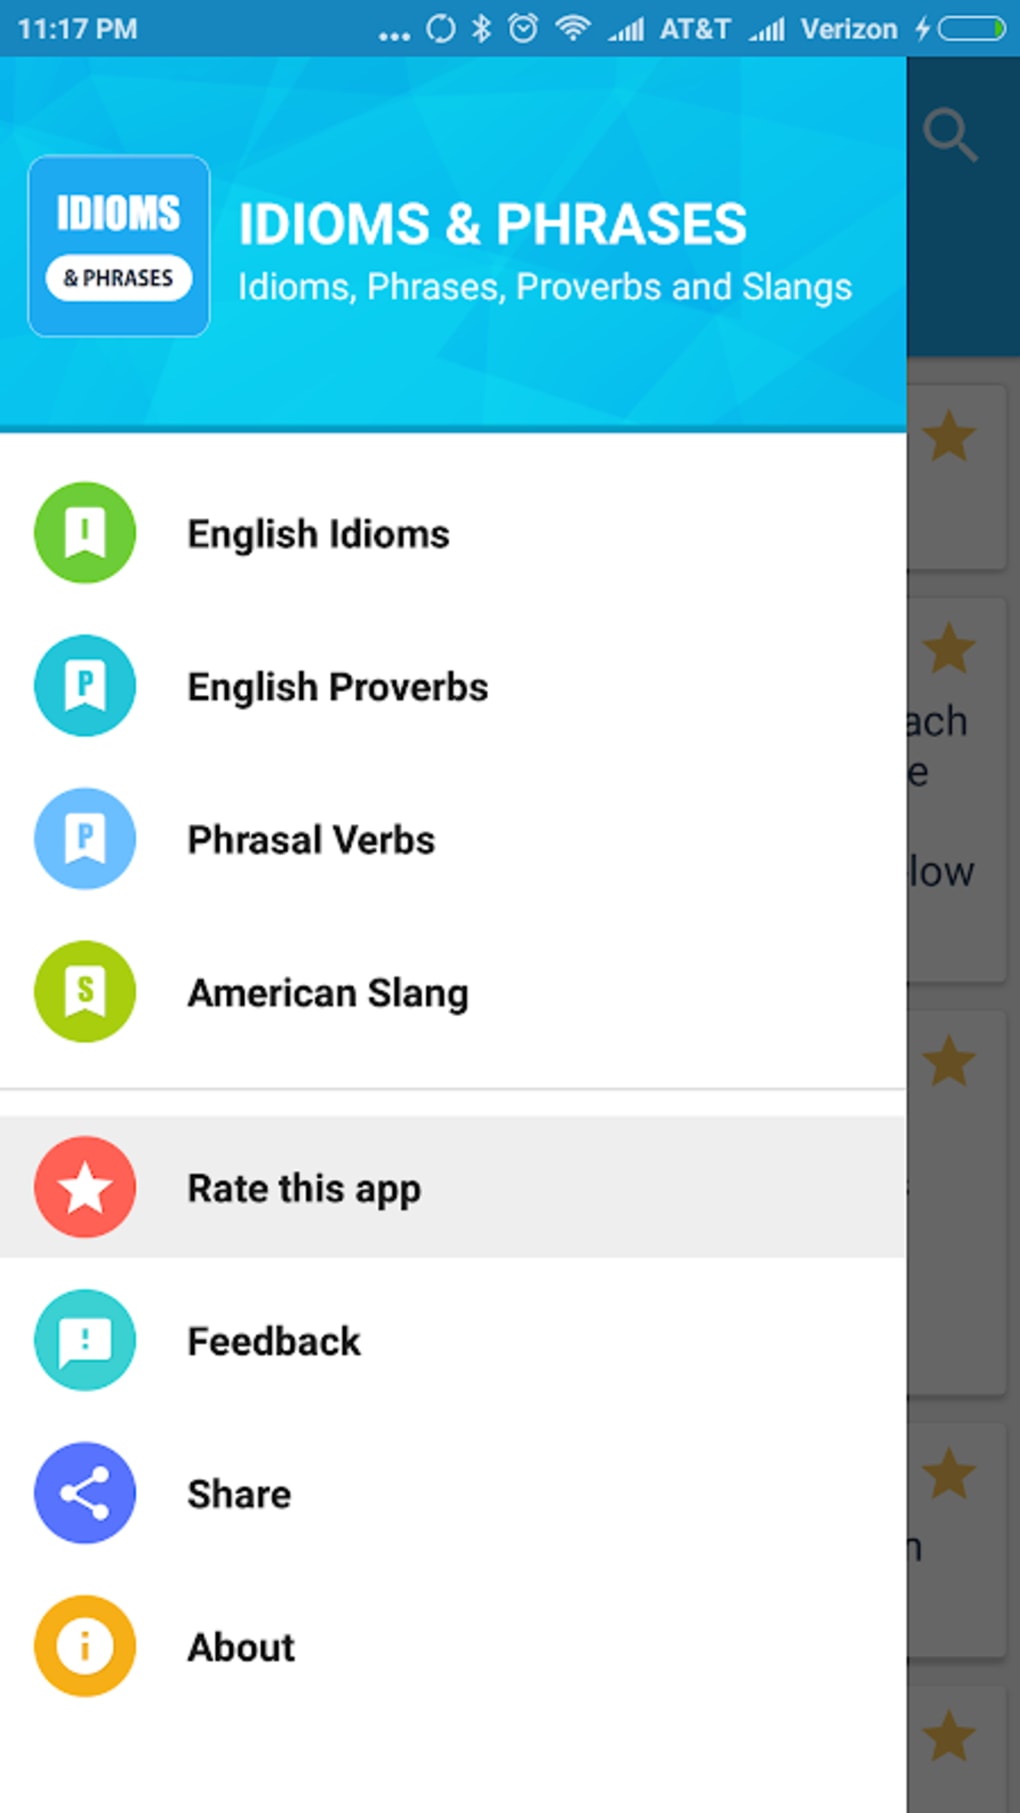 English Idioms & Phrases APK für Android - Download